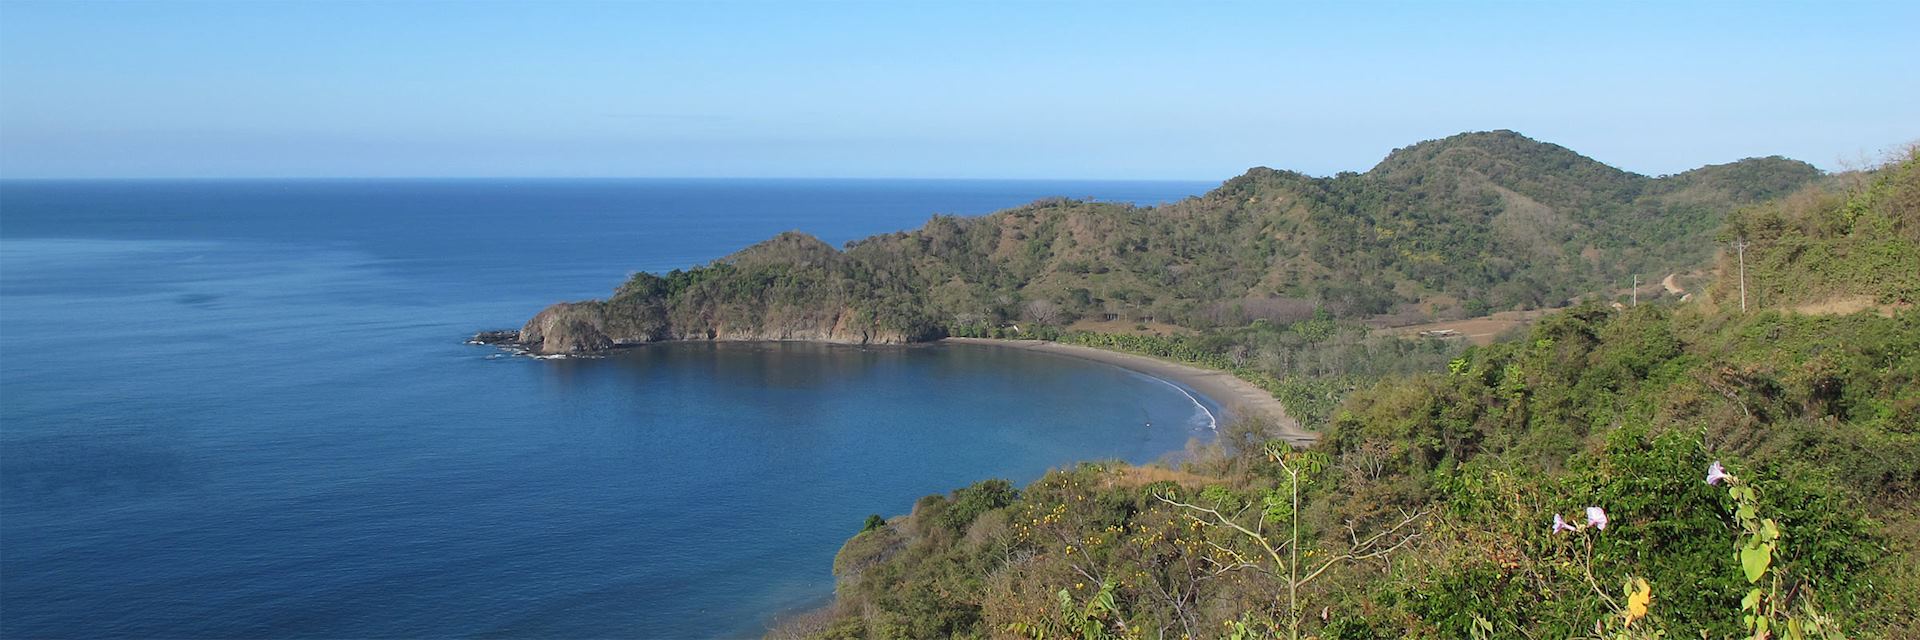 View of the beach at Punta Islita